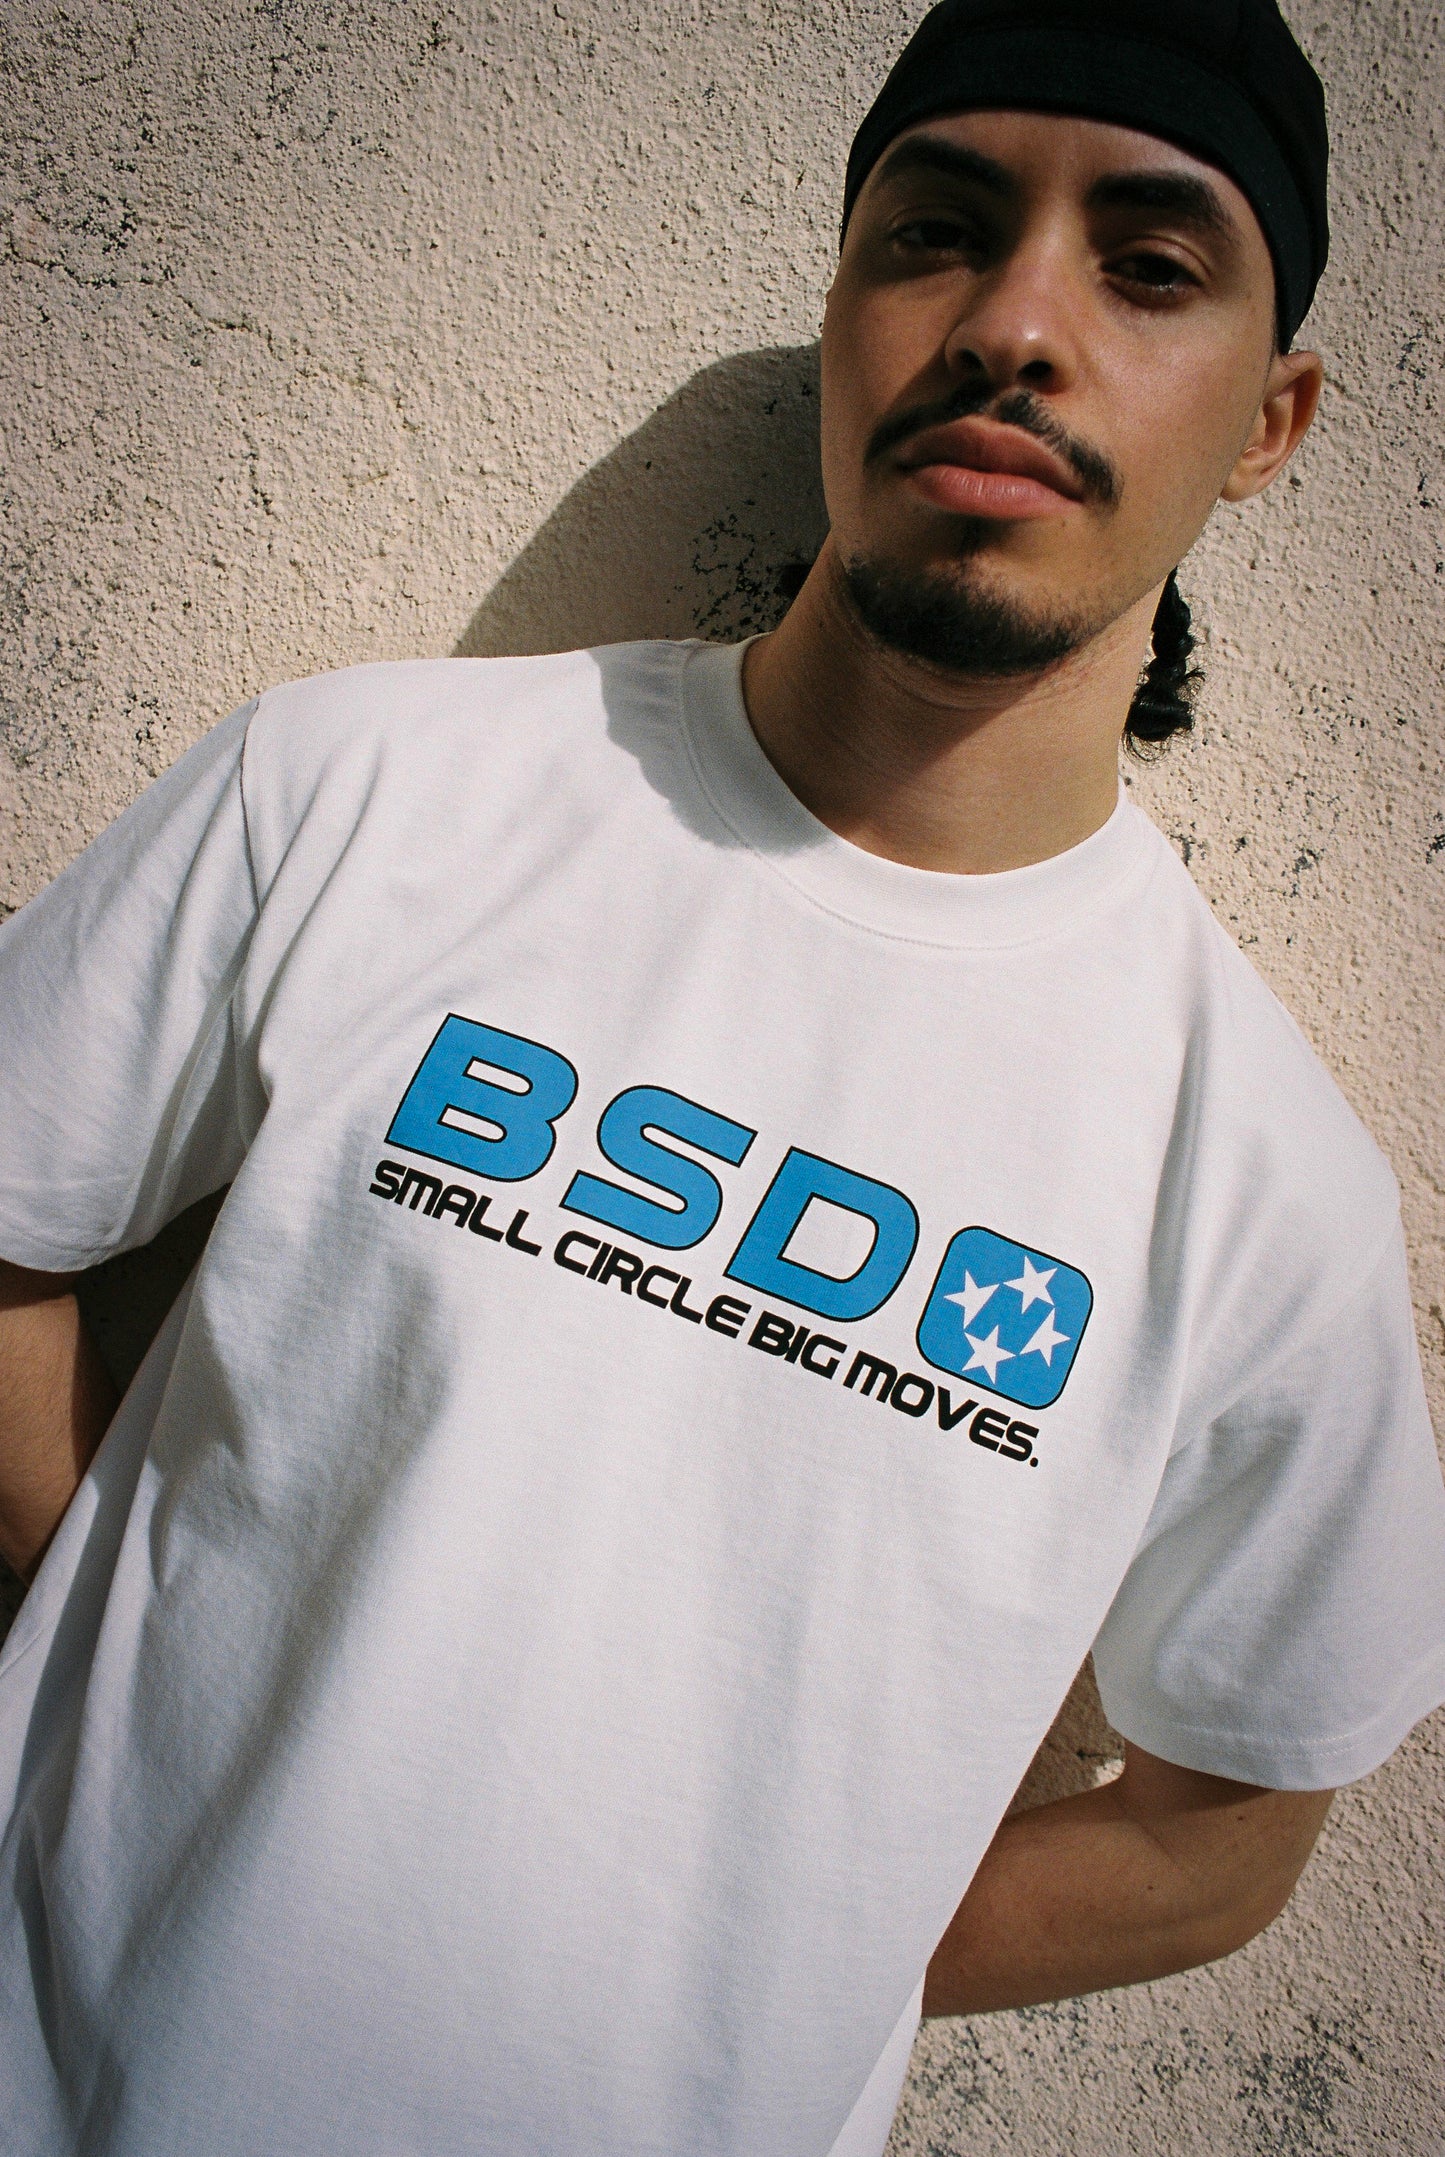 Stash BSD T-Shirt [White]